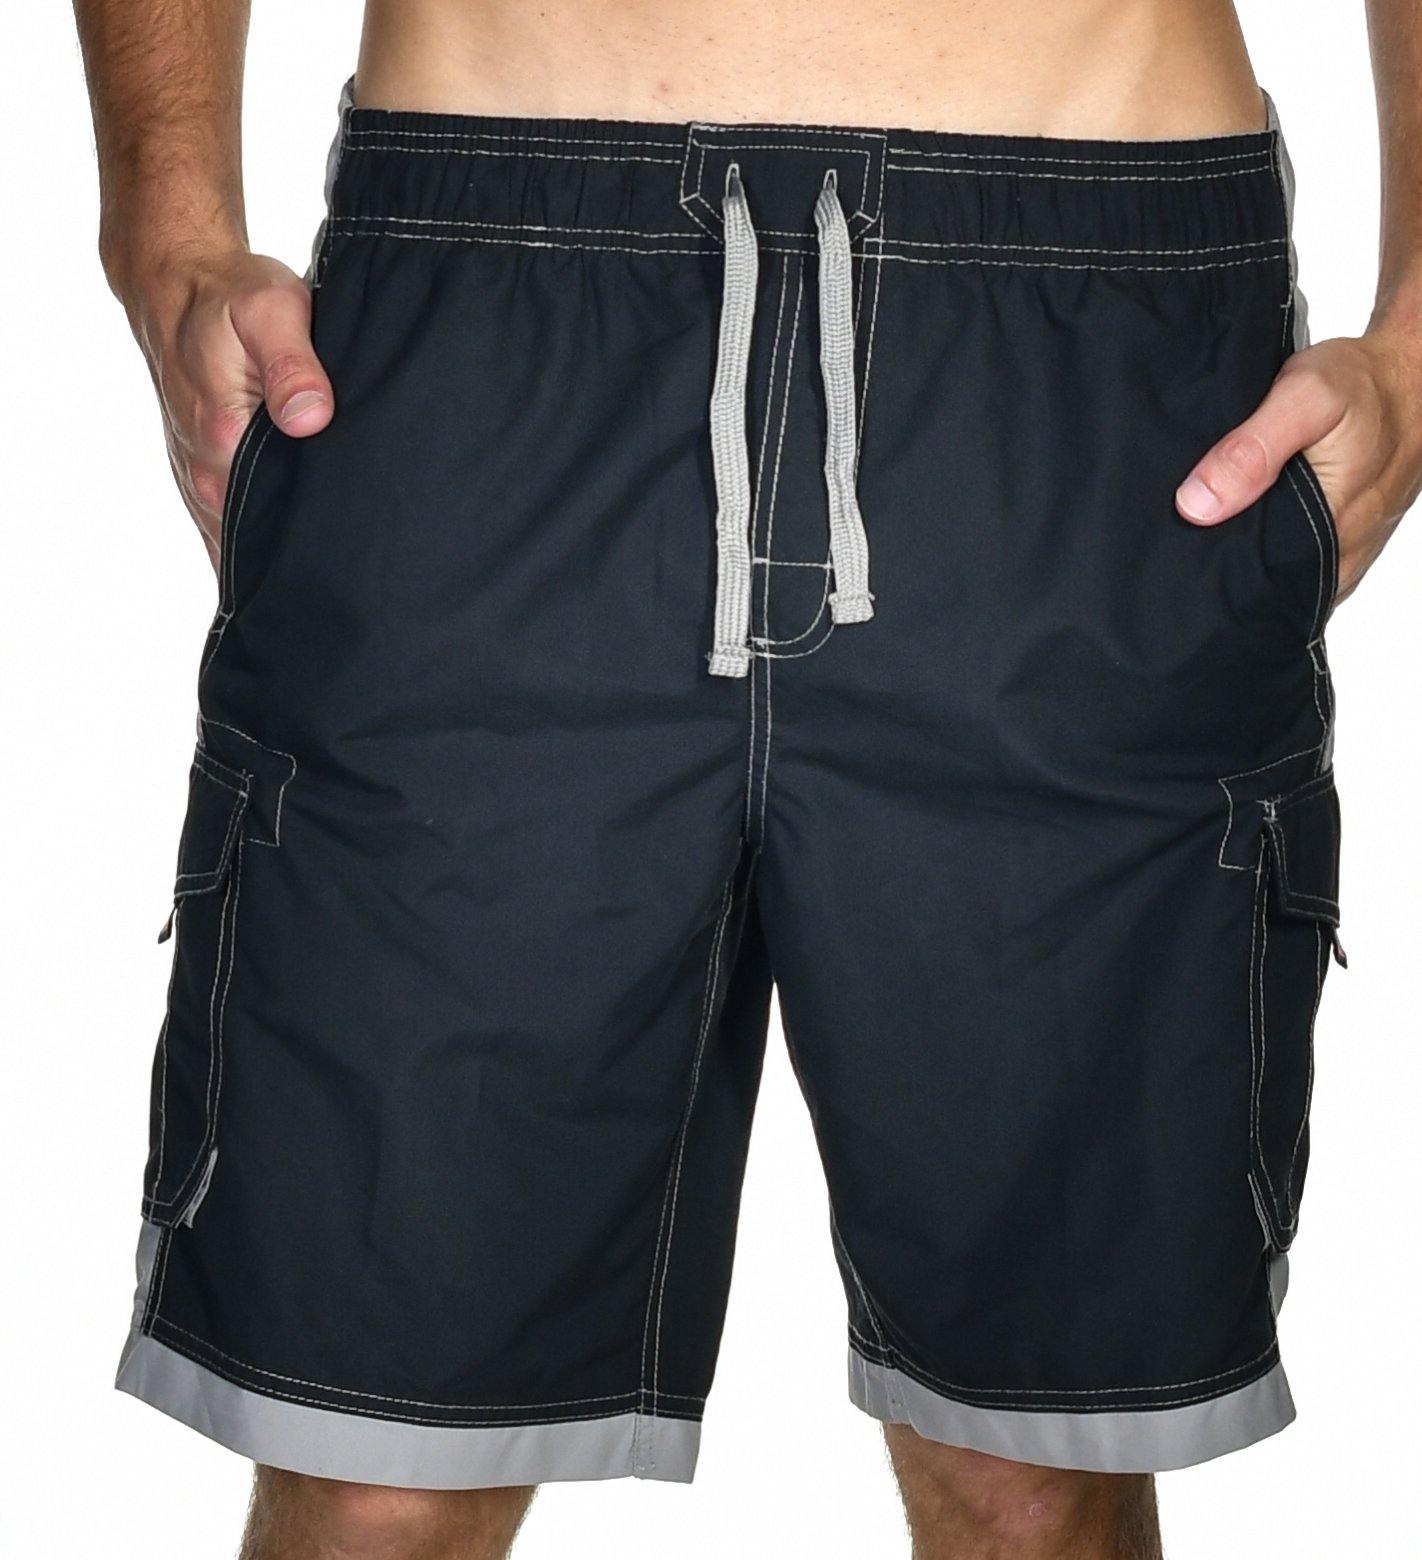 US Apparel Men's Islander Board Shorts, Black